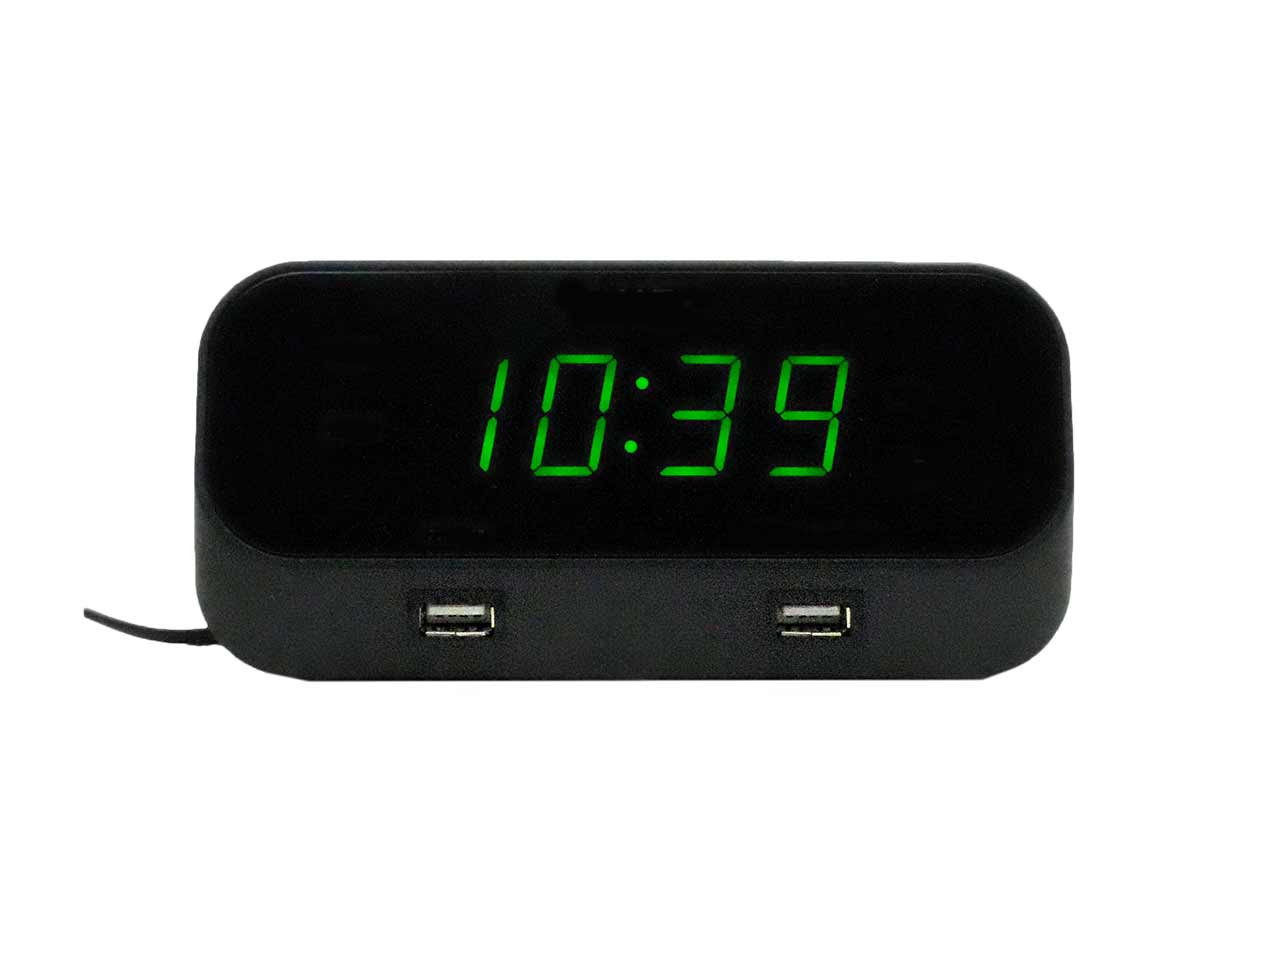 wifi hidden camera alarm clock